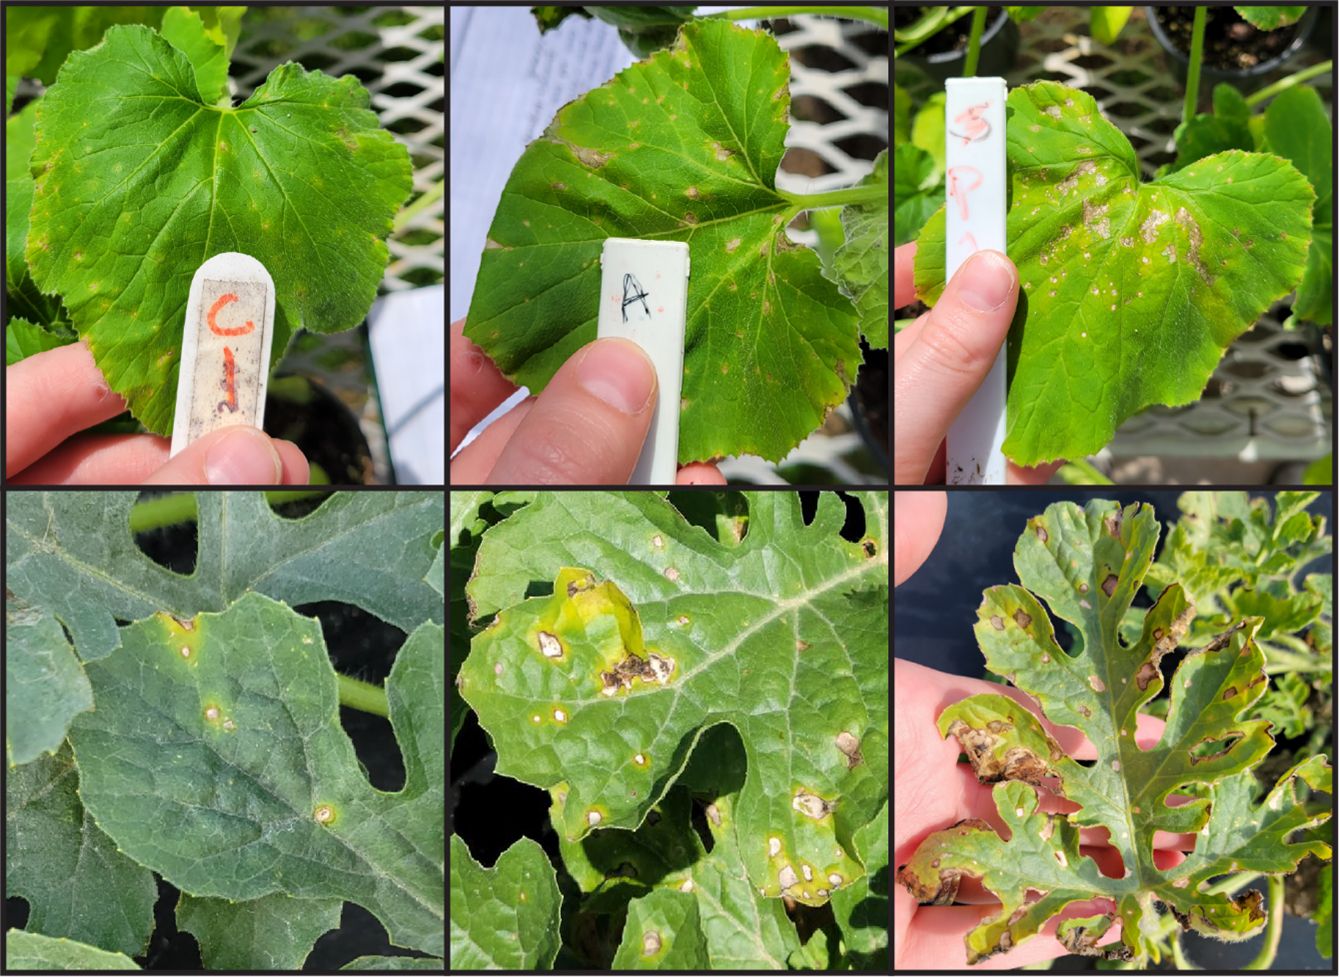 Top row: Bacterial leaf spot (BLS) symptoms on summer squash (Cucurbita pepo). Bottom row: BLS symptoms on watermelon (Citrullus lanatus). 